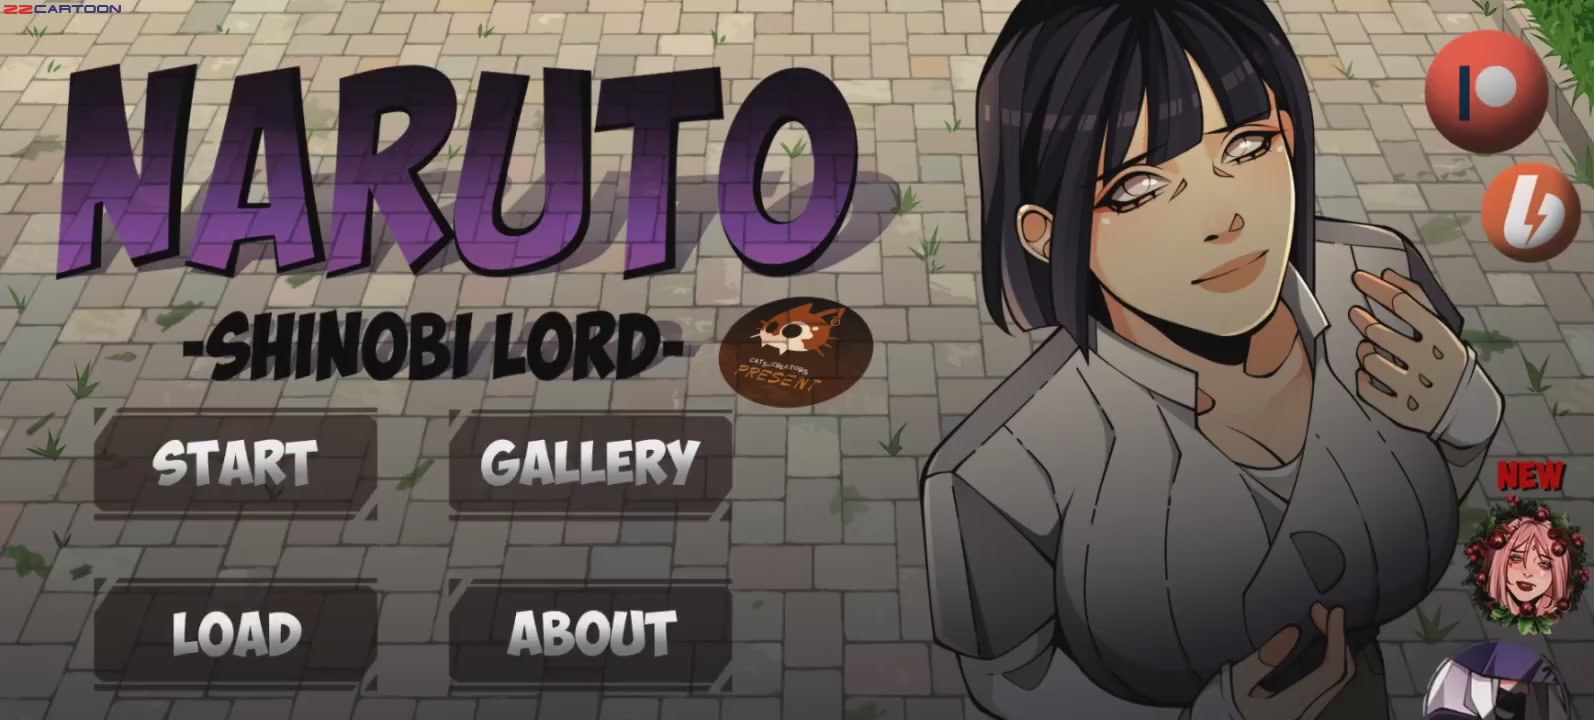 Naruto Shinobi Lord - Part 2 - Sakura And Hinata Special Threesome By LoveSkySan